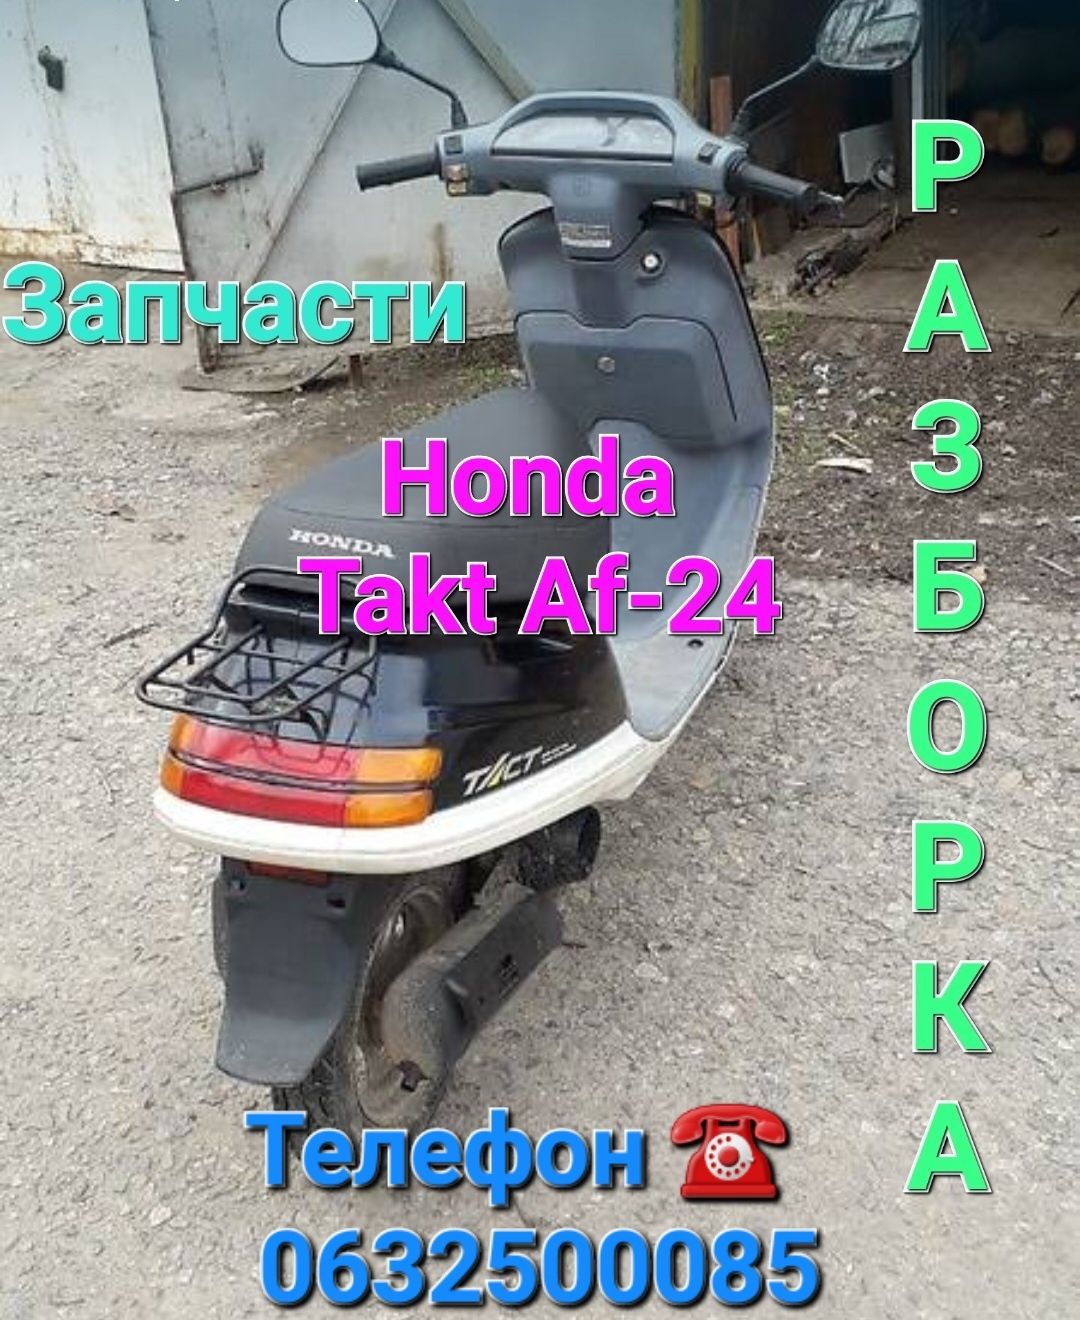 Honda Takt Af 24,хонда такт